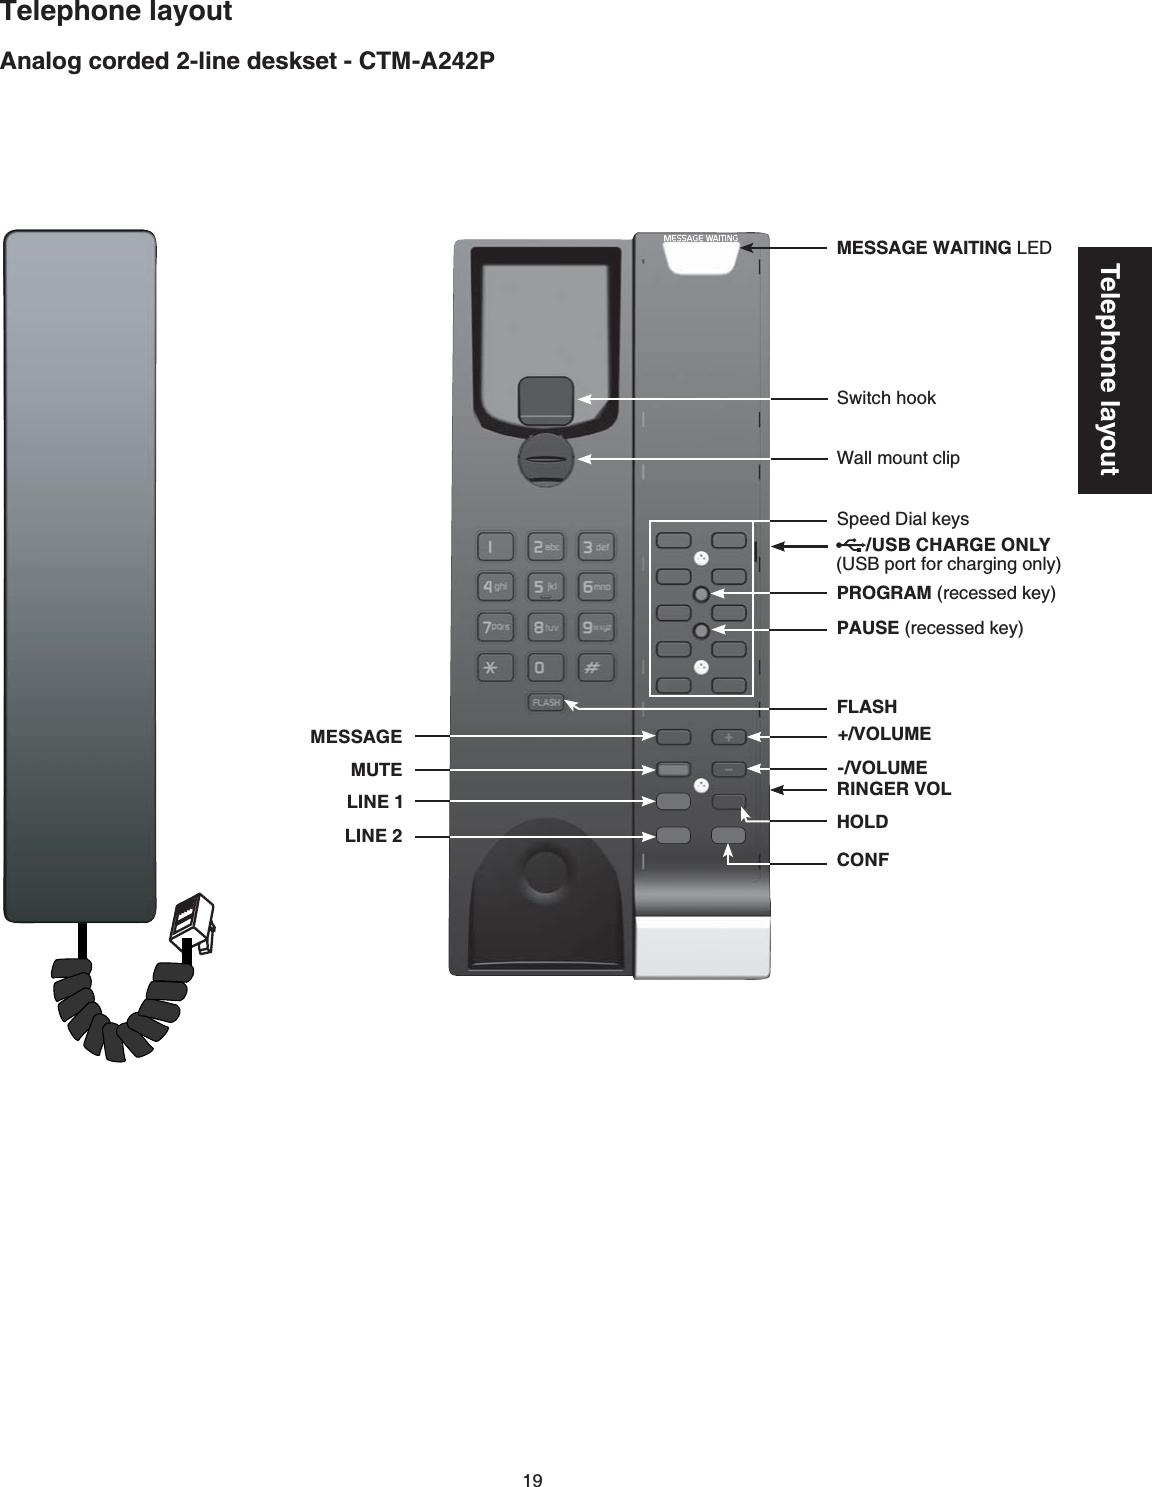 19Telephone layoutTelephone layoutAnalog corded 2-line deskset - CTM-A242PMESSAGE WAITING LED-/VOLUME+/VOLUMEPROGRAMTGEGUUGFMG[PAUSETGEGUUGFMG[FLASHHOLDMUTESpeed Dial keysLINE 1LINE 2CONFWall mount clipSwitch hookRINGER VOLMESSAGE/USB CHARGE ONLY(USB port for cJCTIKPIQPN[